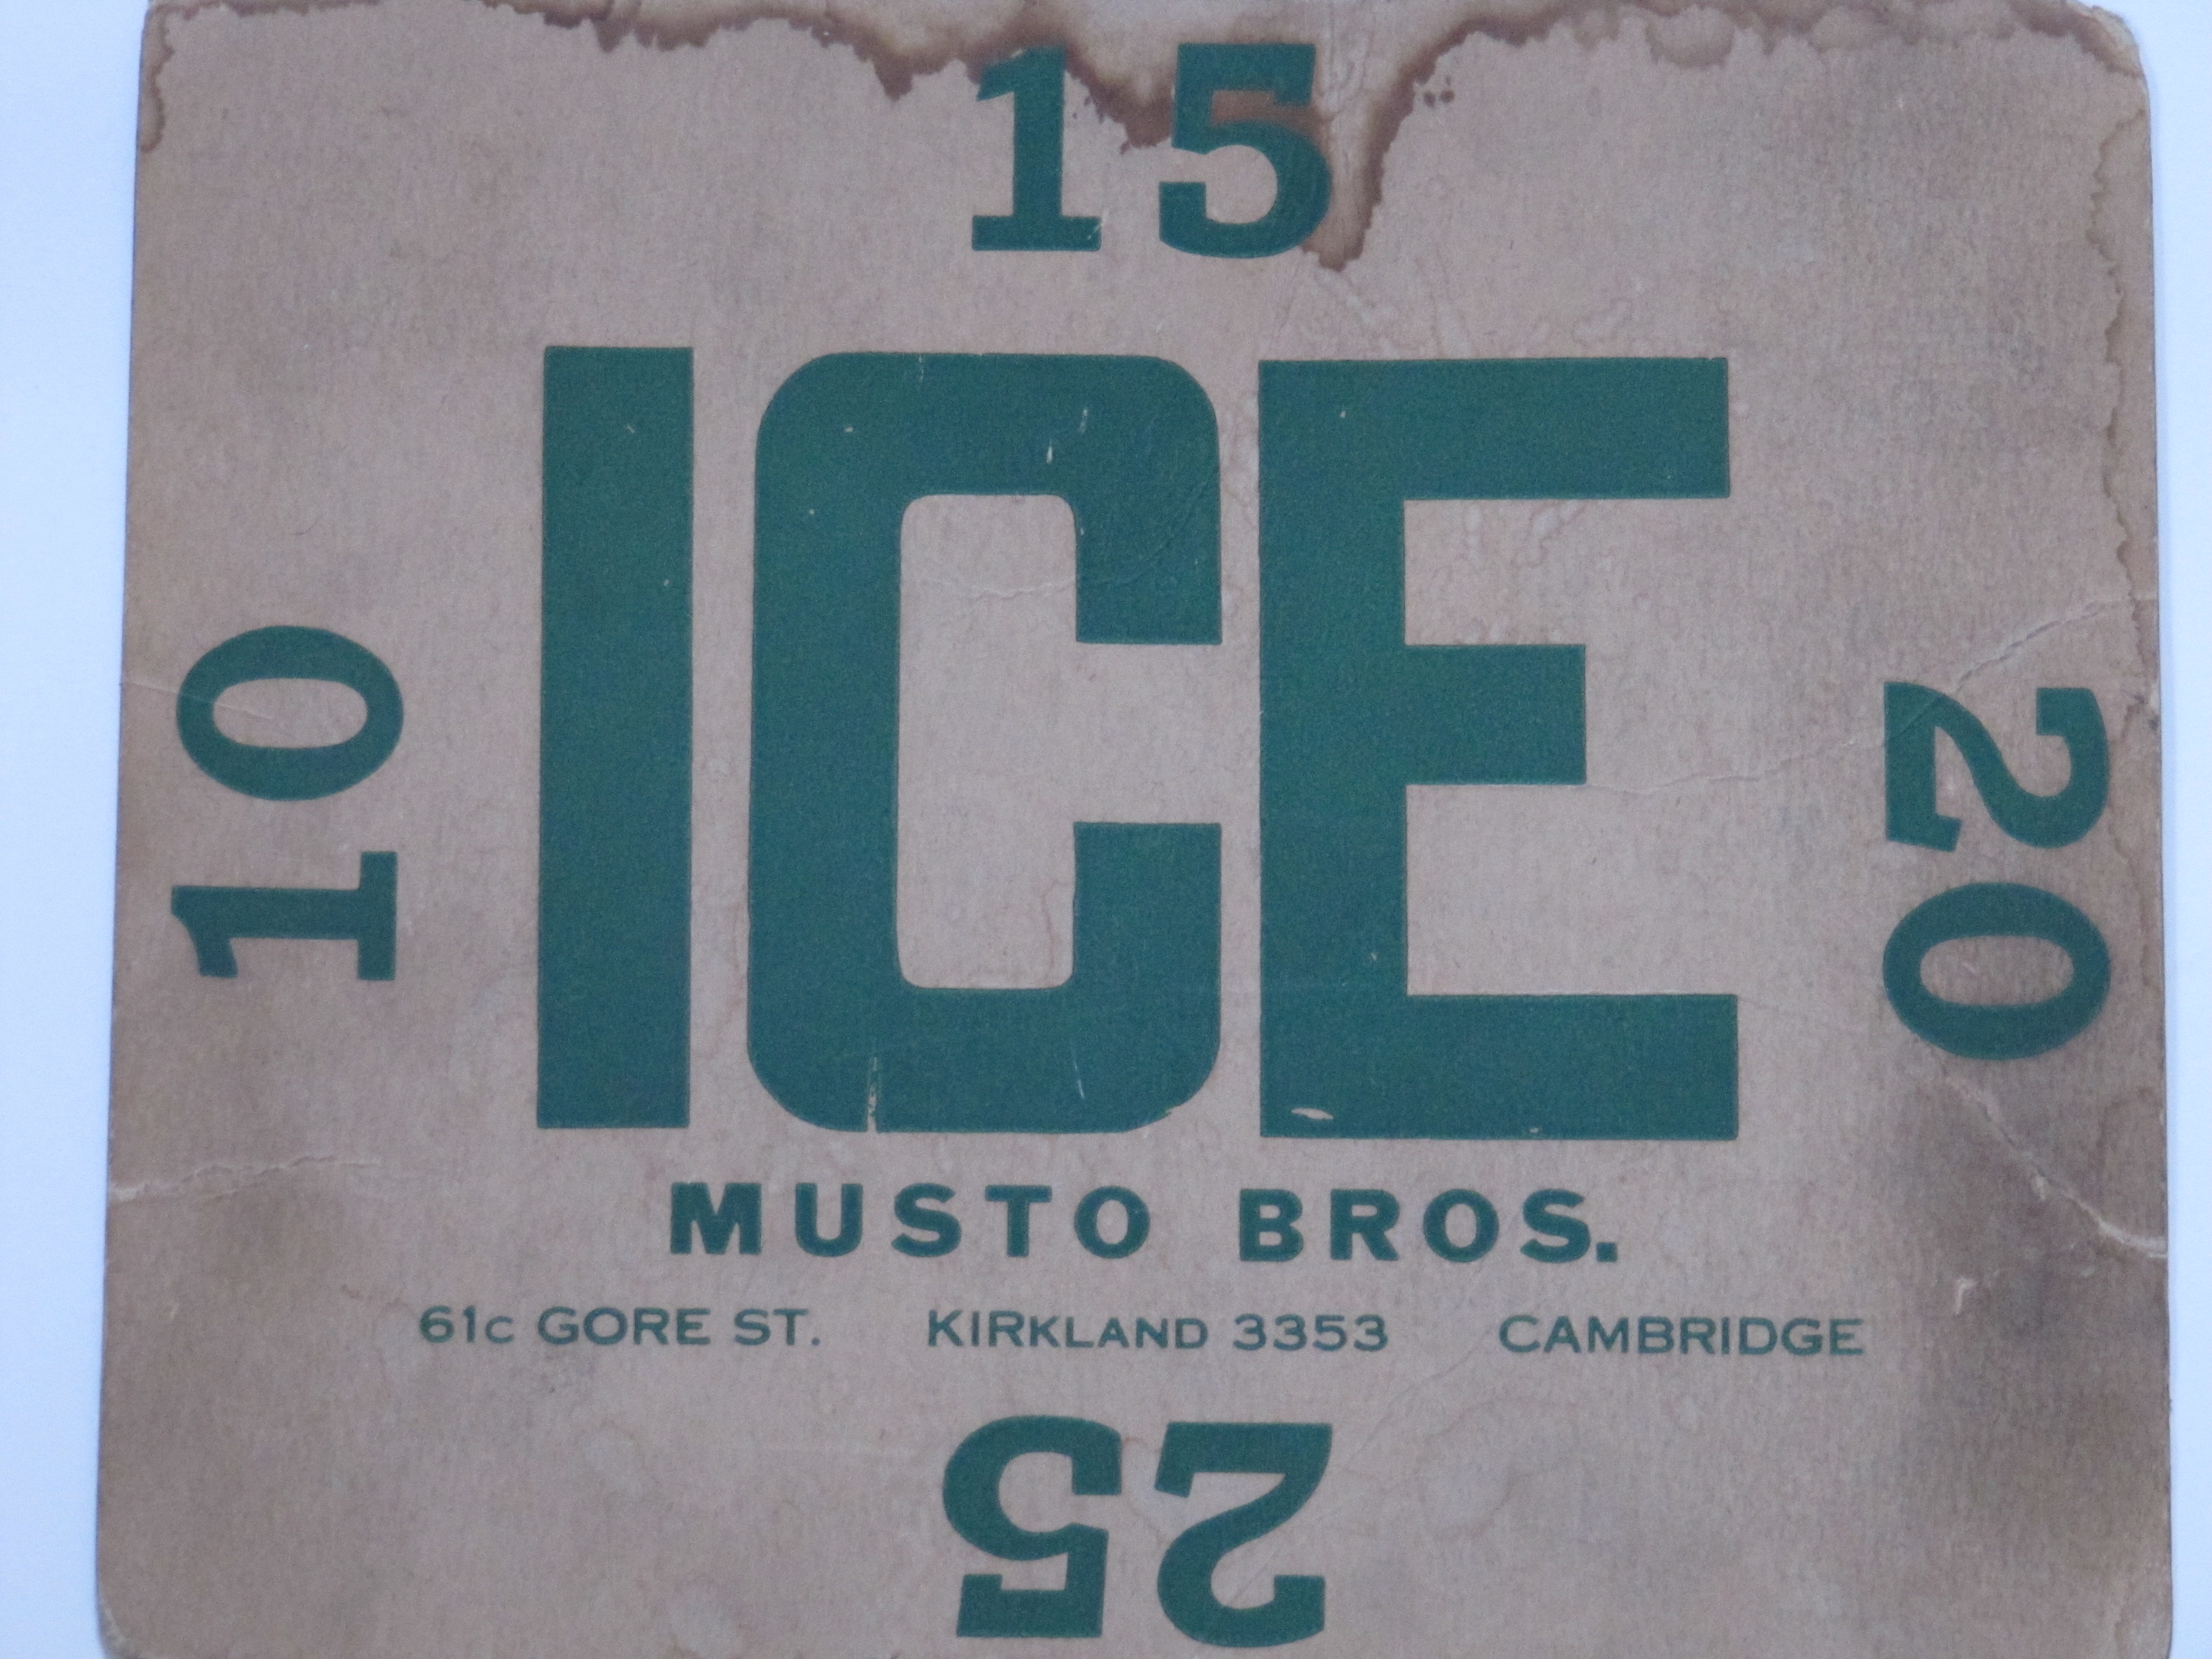 Musto Bros. Ice